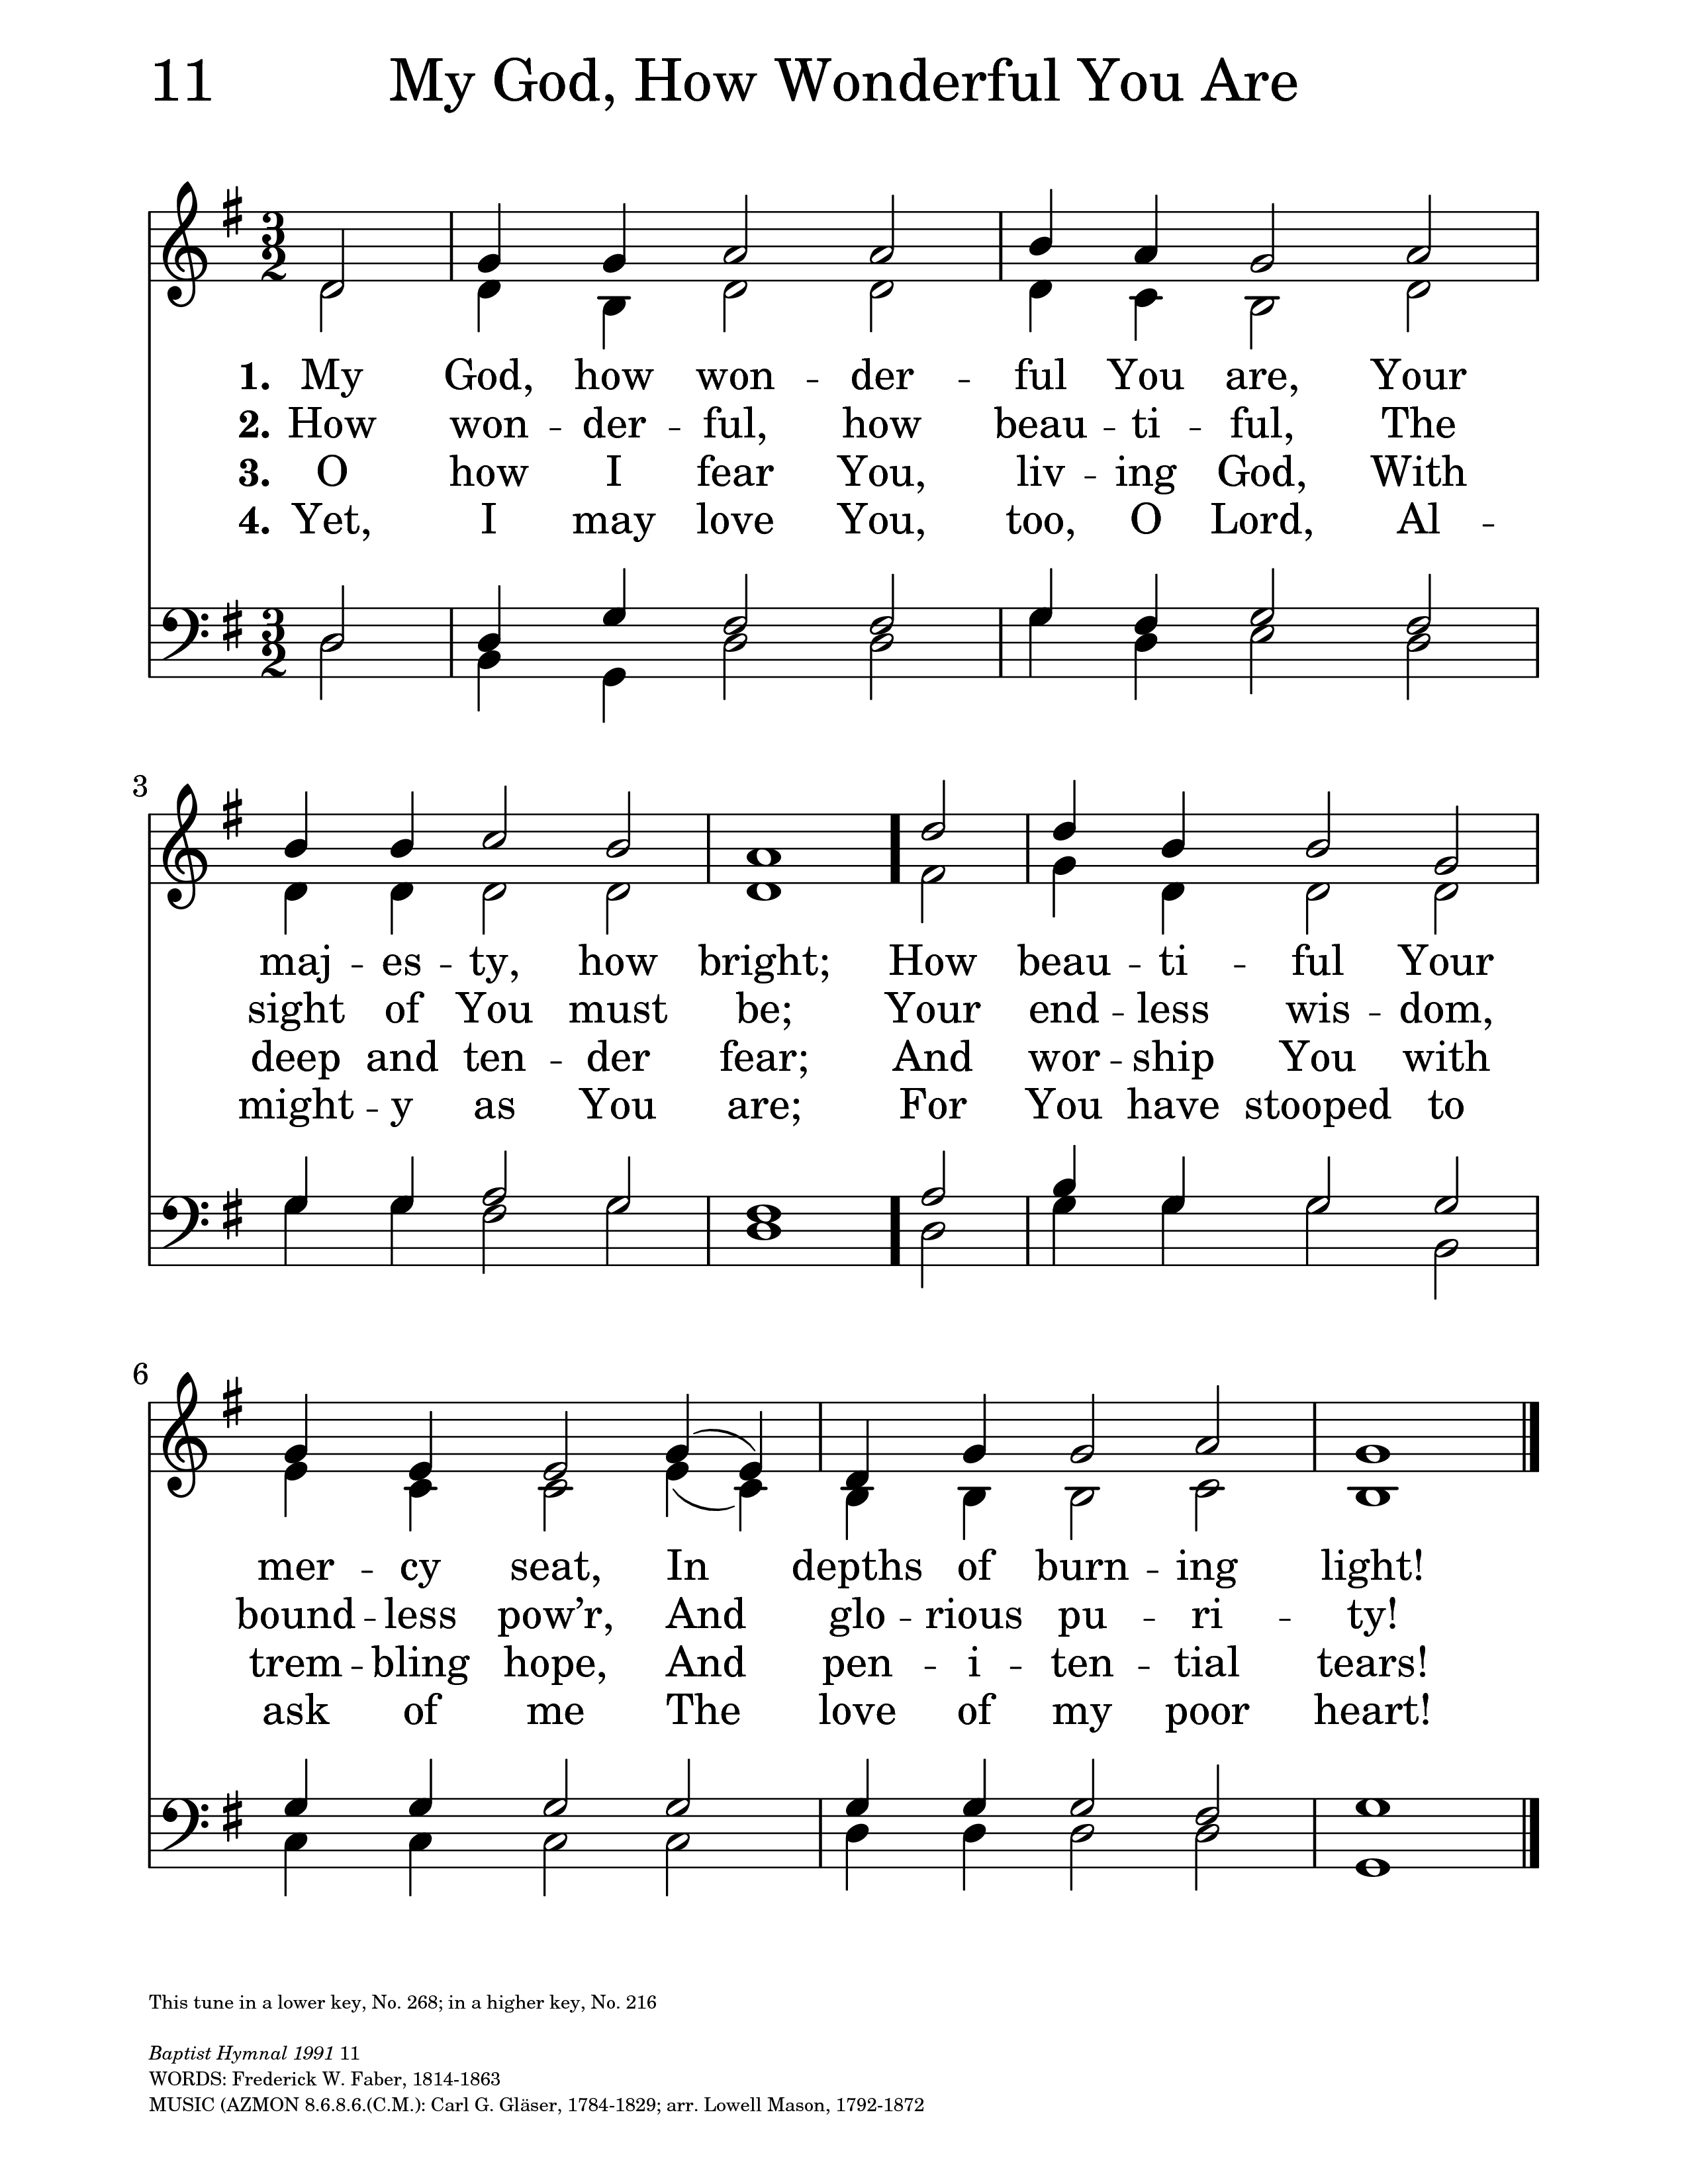 Free Choir Sheet Music - How Great Thou Art  Hymn sheet music, Gospel song  lyrics, Christian song lyrics